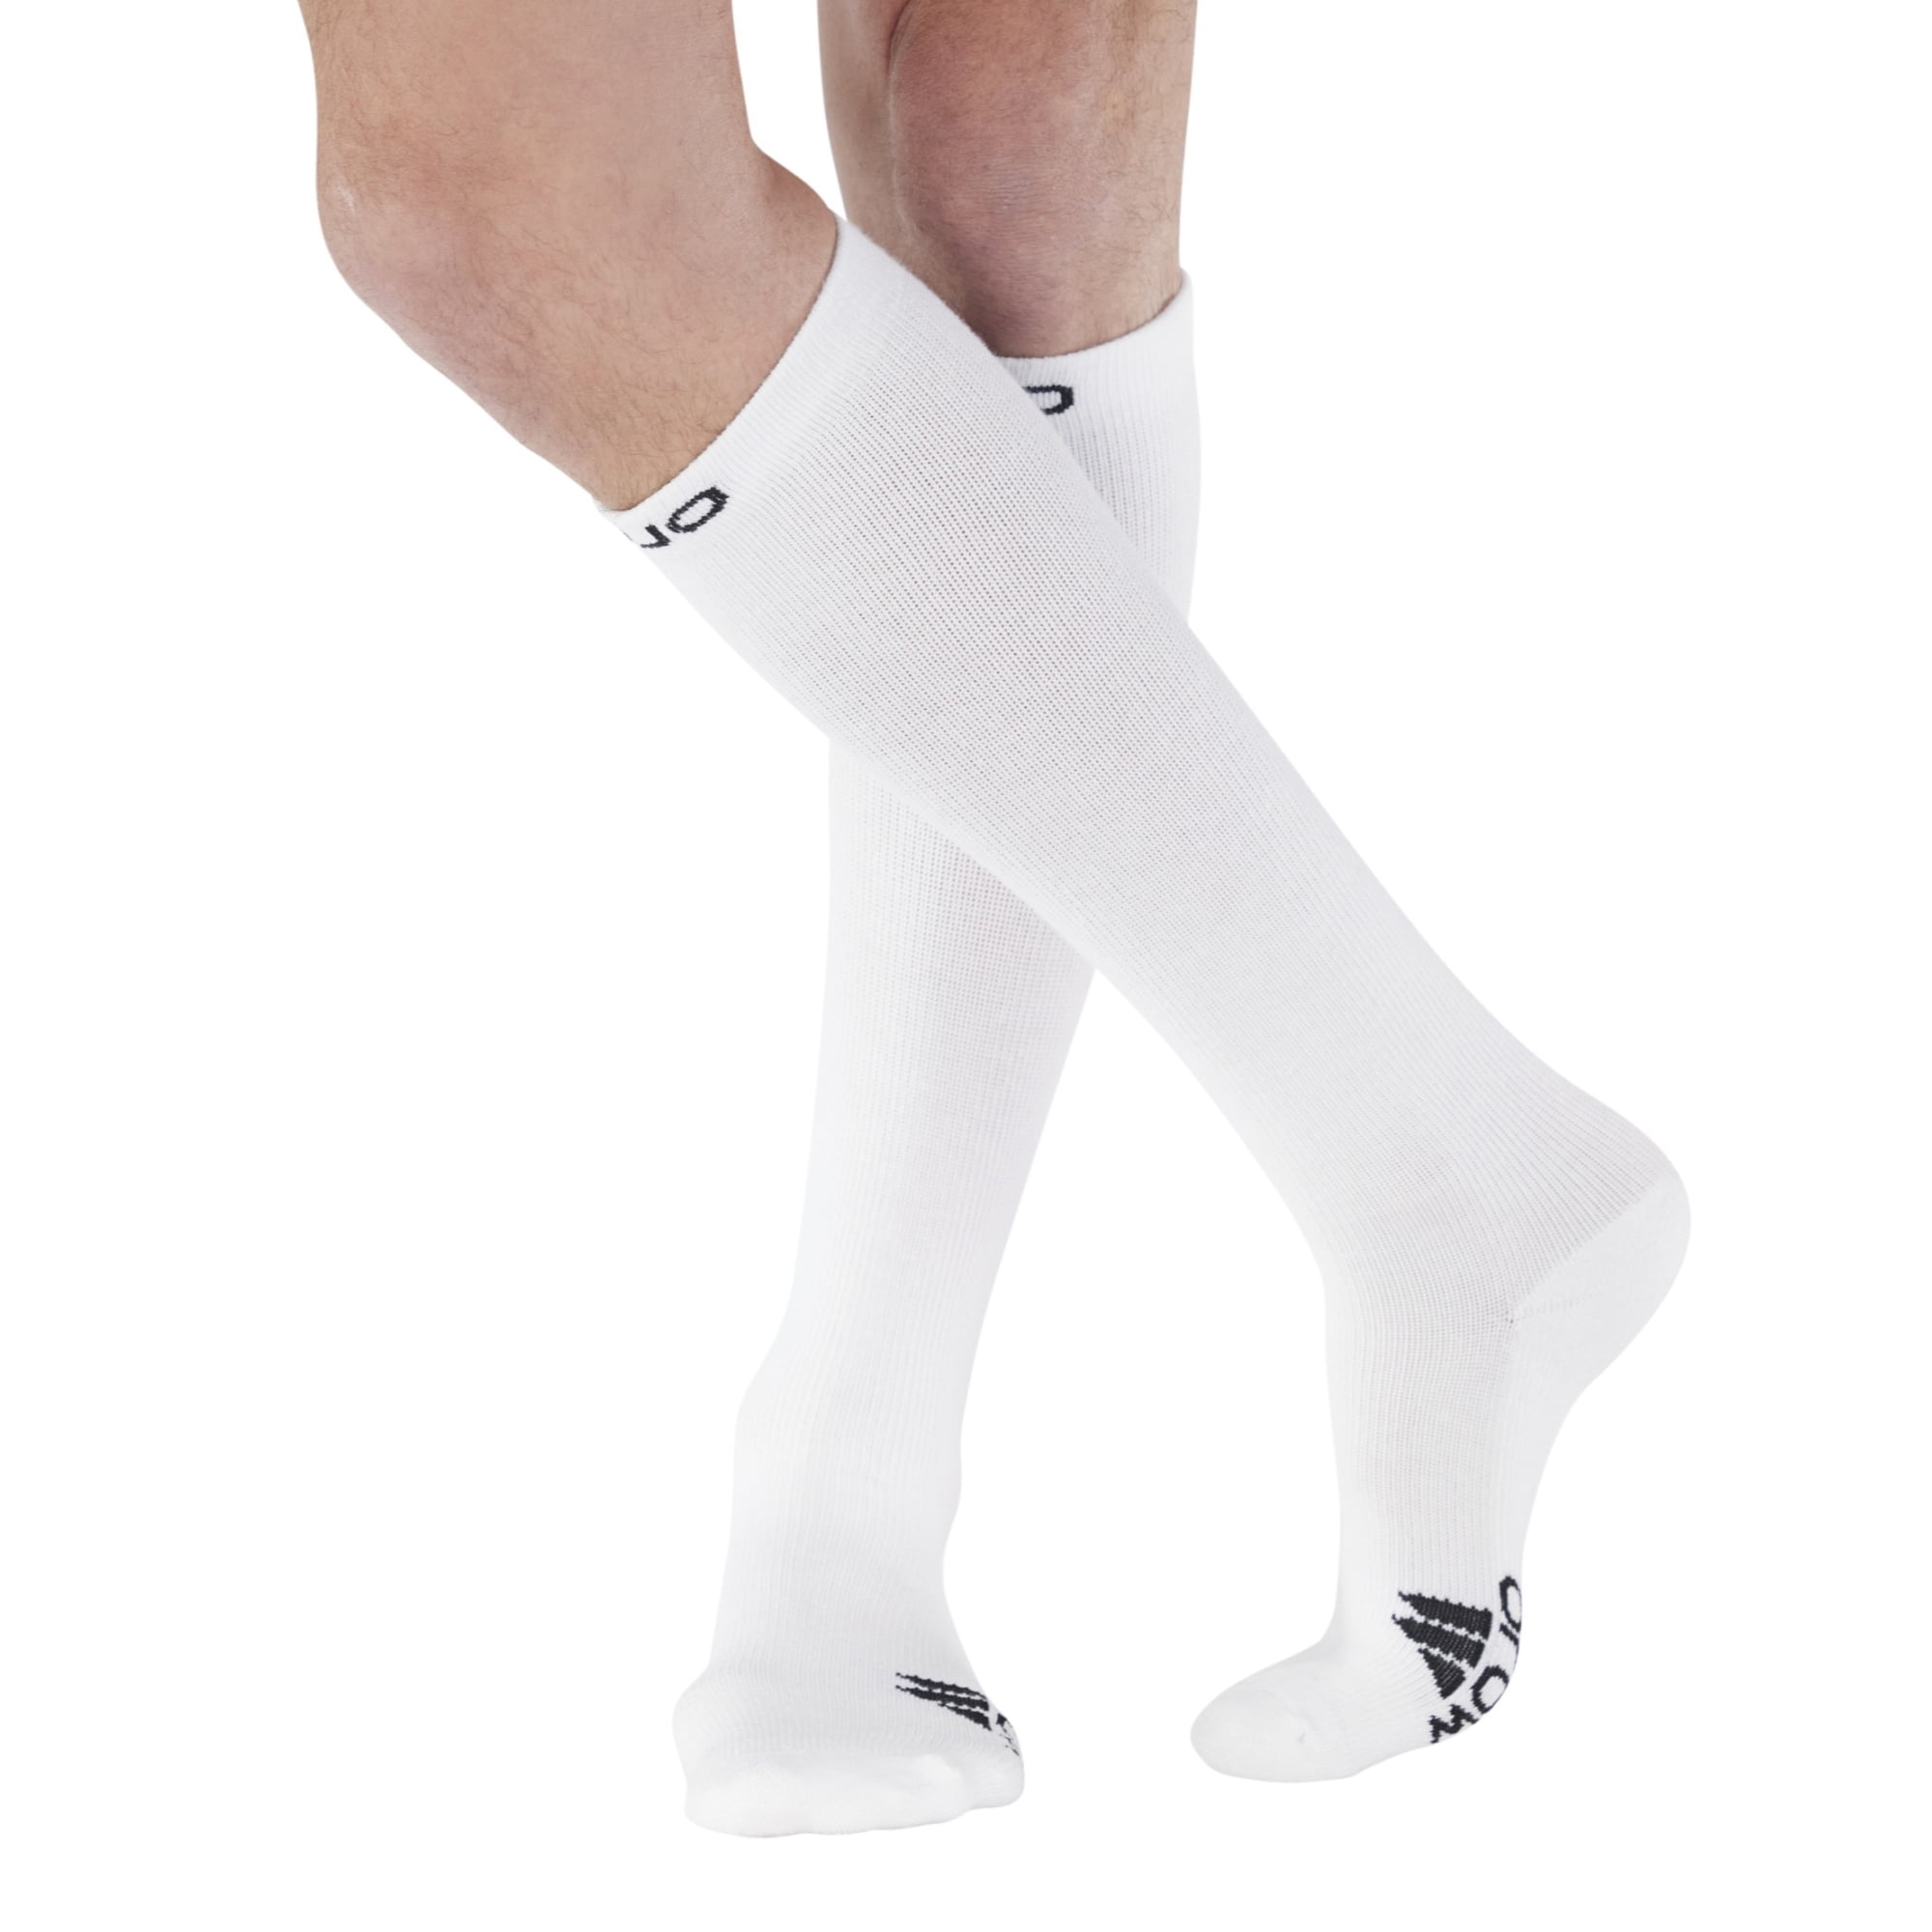 Mojo compression Socks closed Toe Knee-High Support Hose - 20